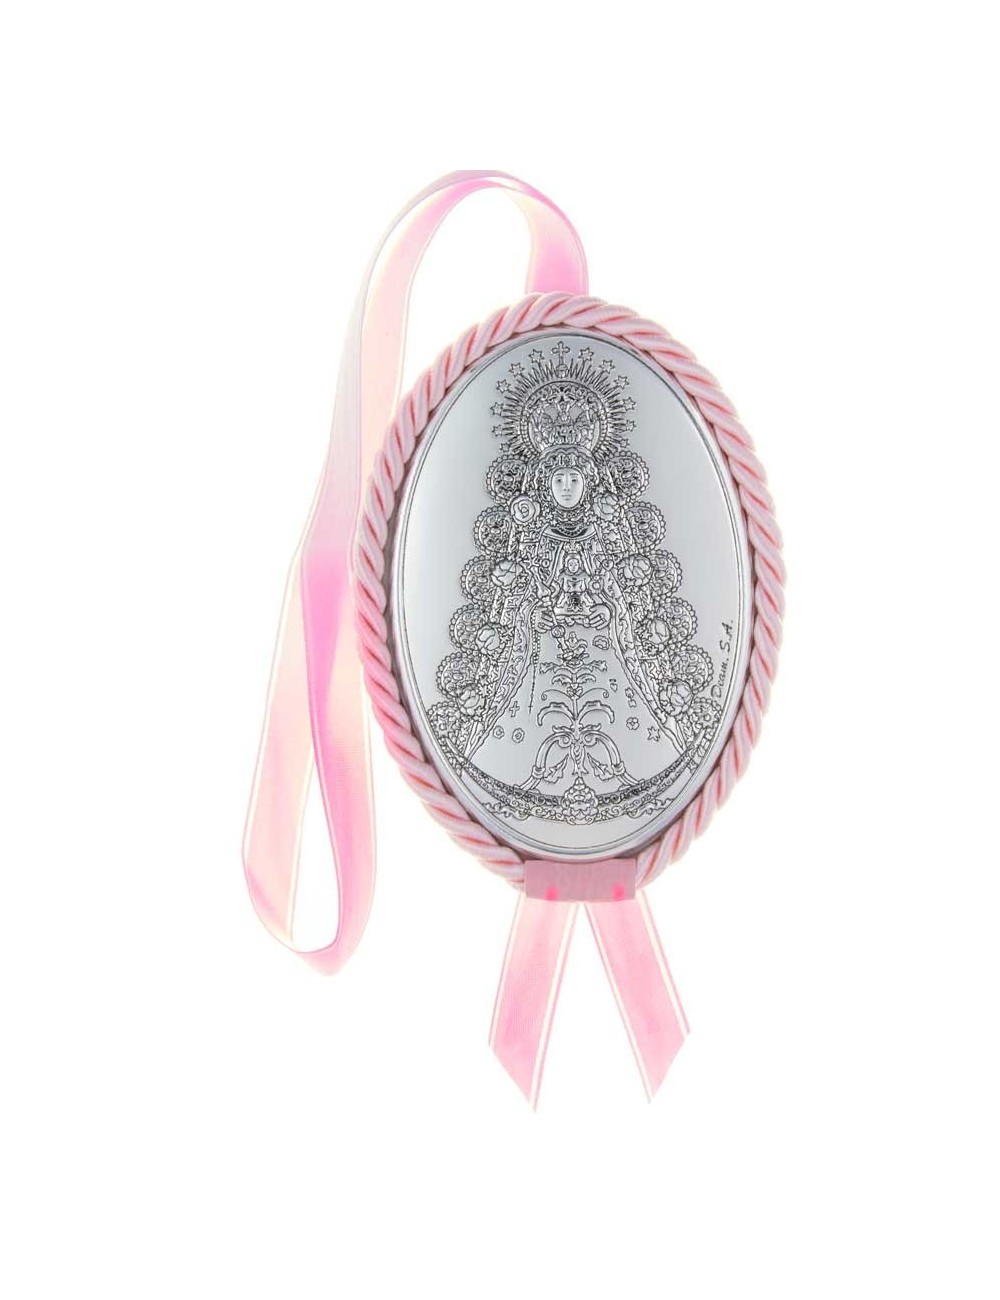 Medalla cuna Virgen de la Cabeza polipiel oval rosa musical